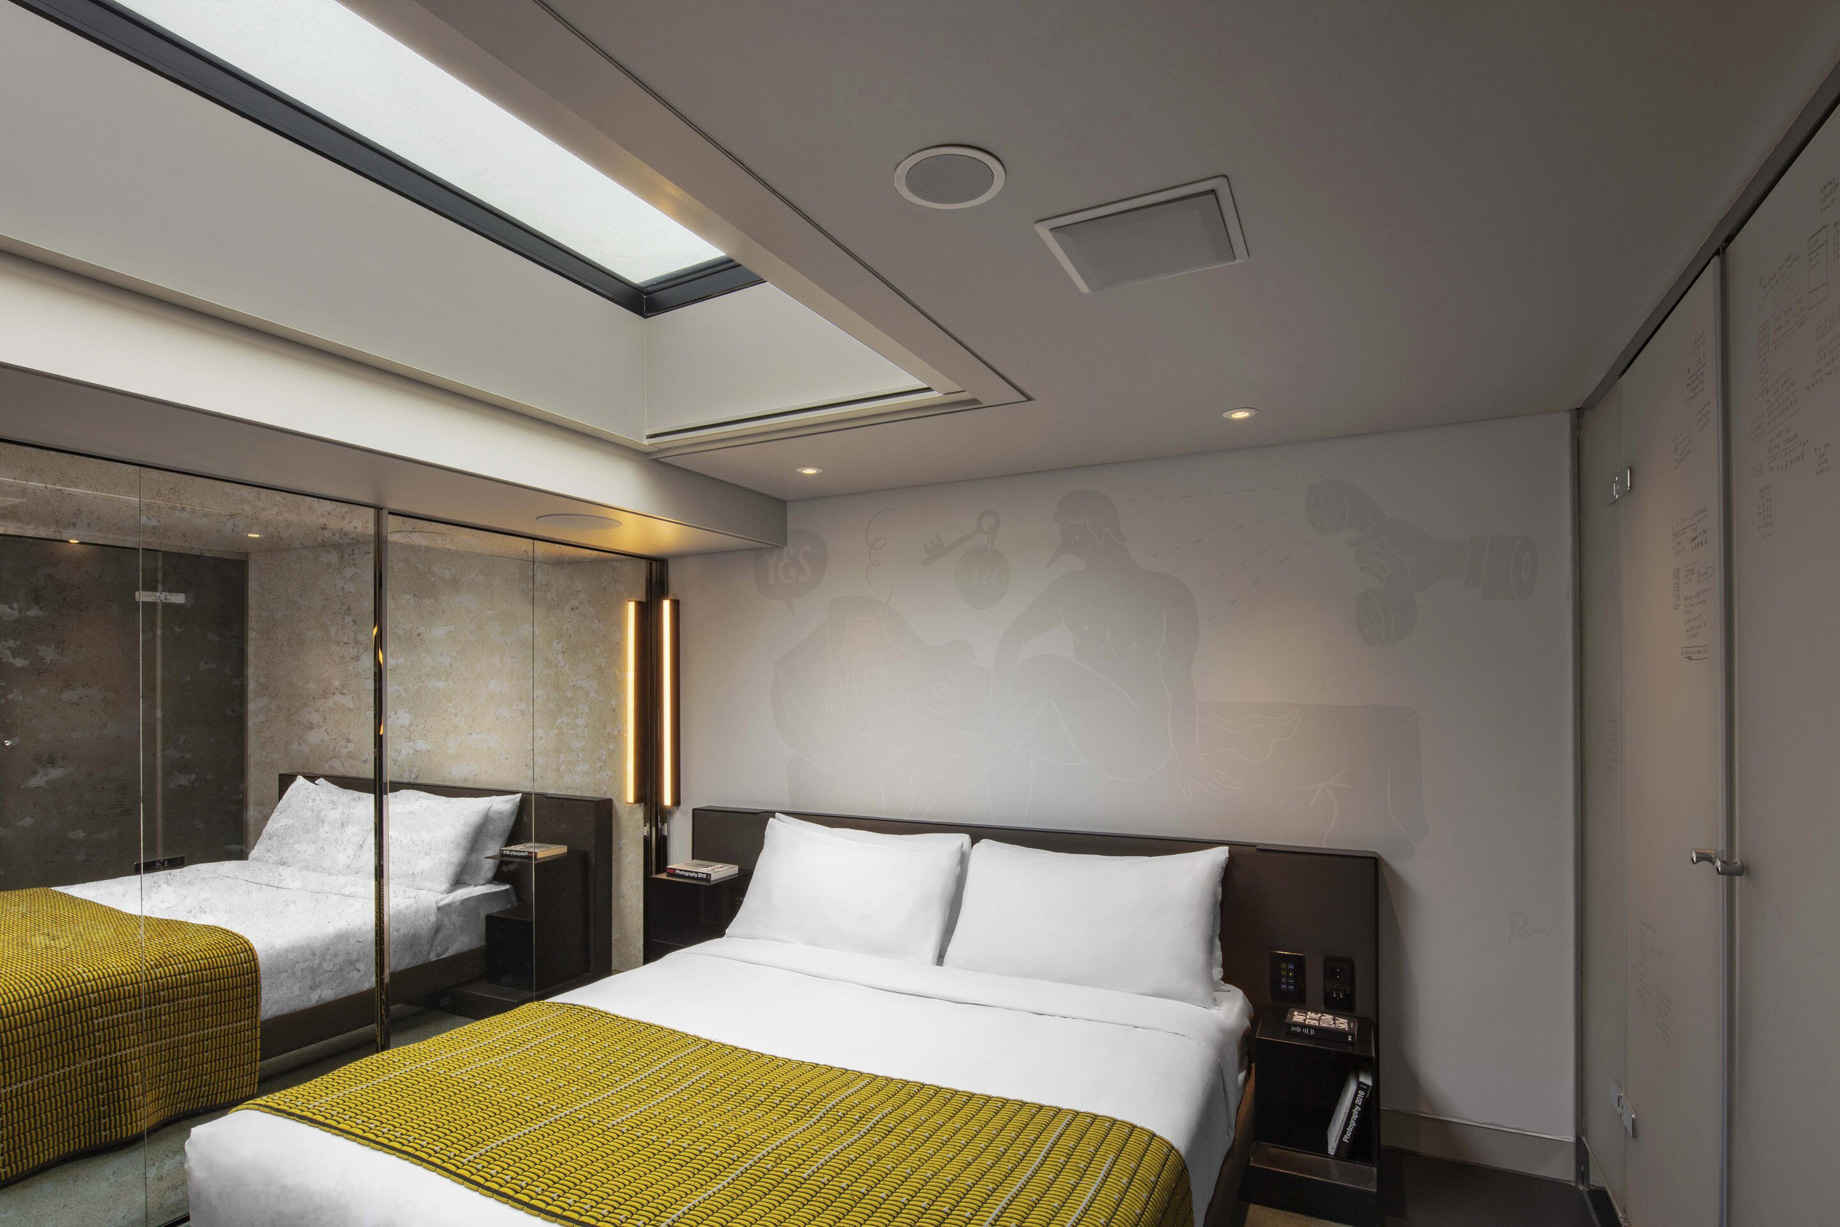 W Amsterdam Hotel – Amsterdam, Netherlands – Marvelous Bank One Bedroom Bi Level Loft